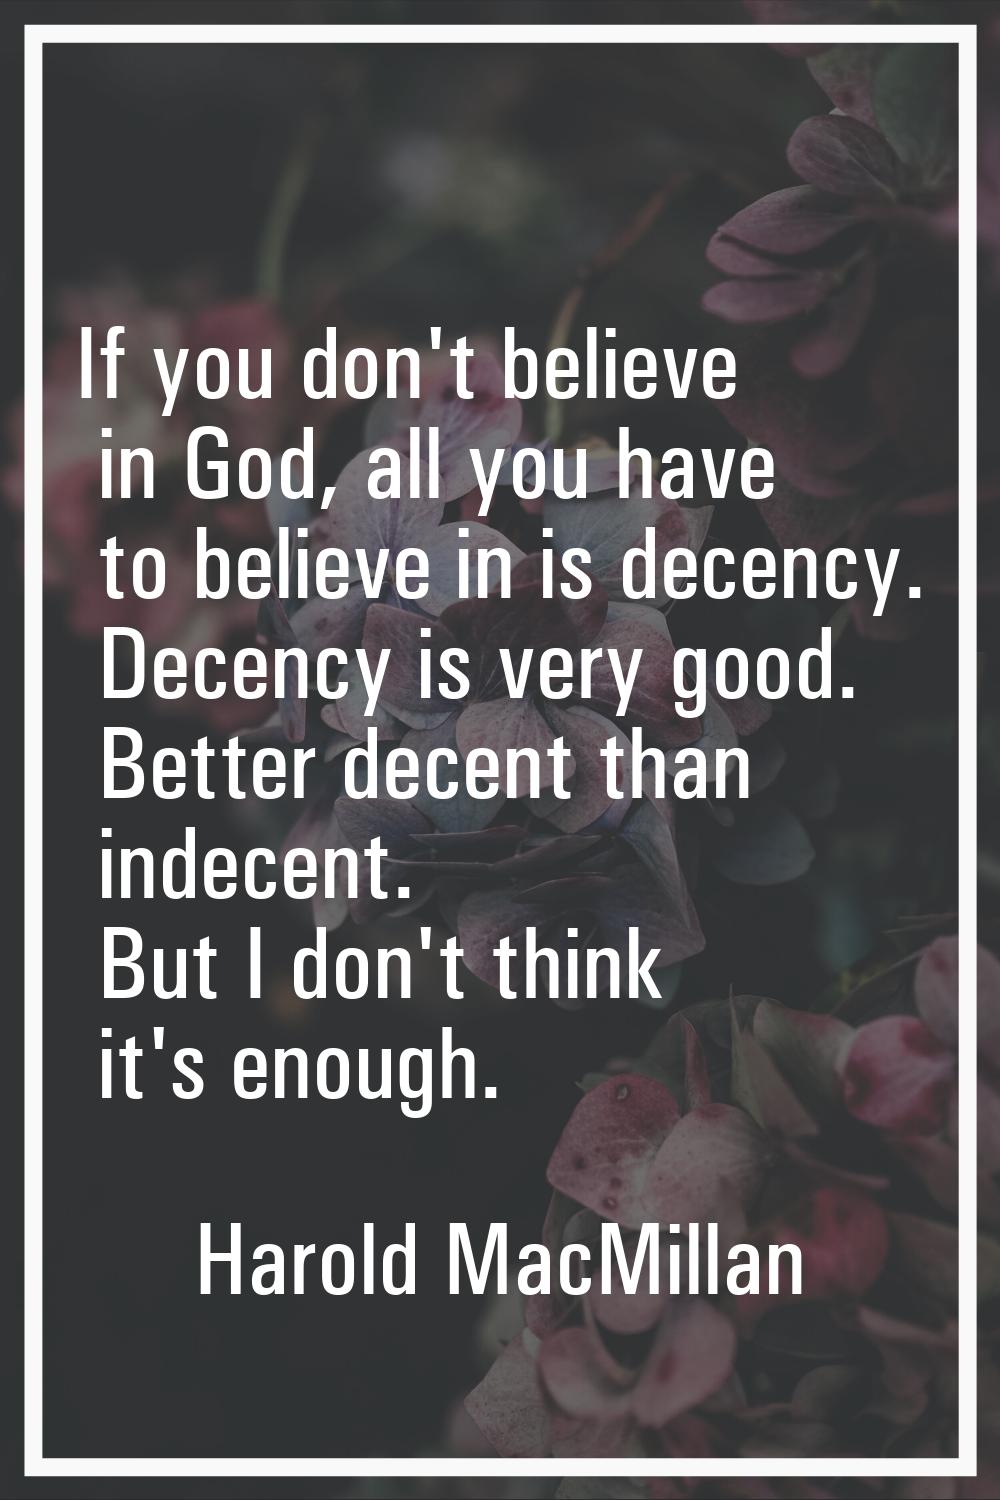 If you don't believe in God, all you have to believe in is decency. Decency is very good. Better de